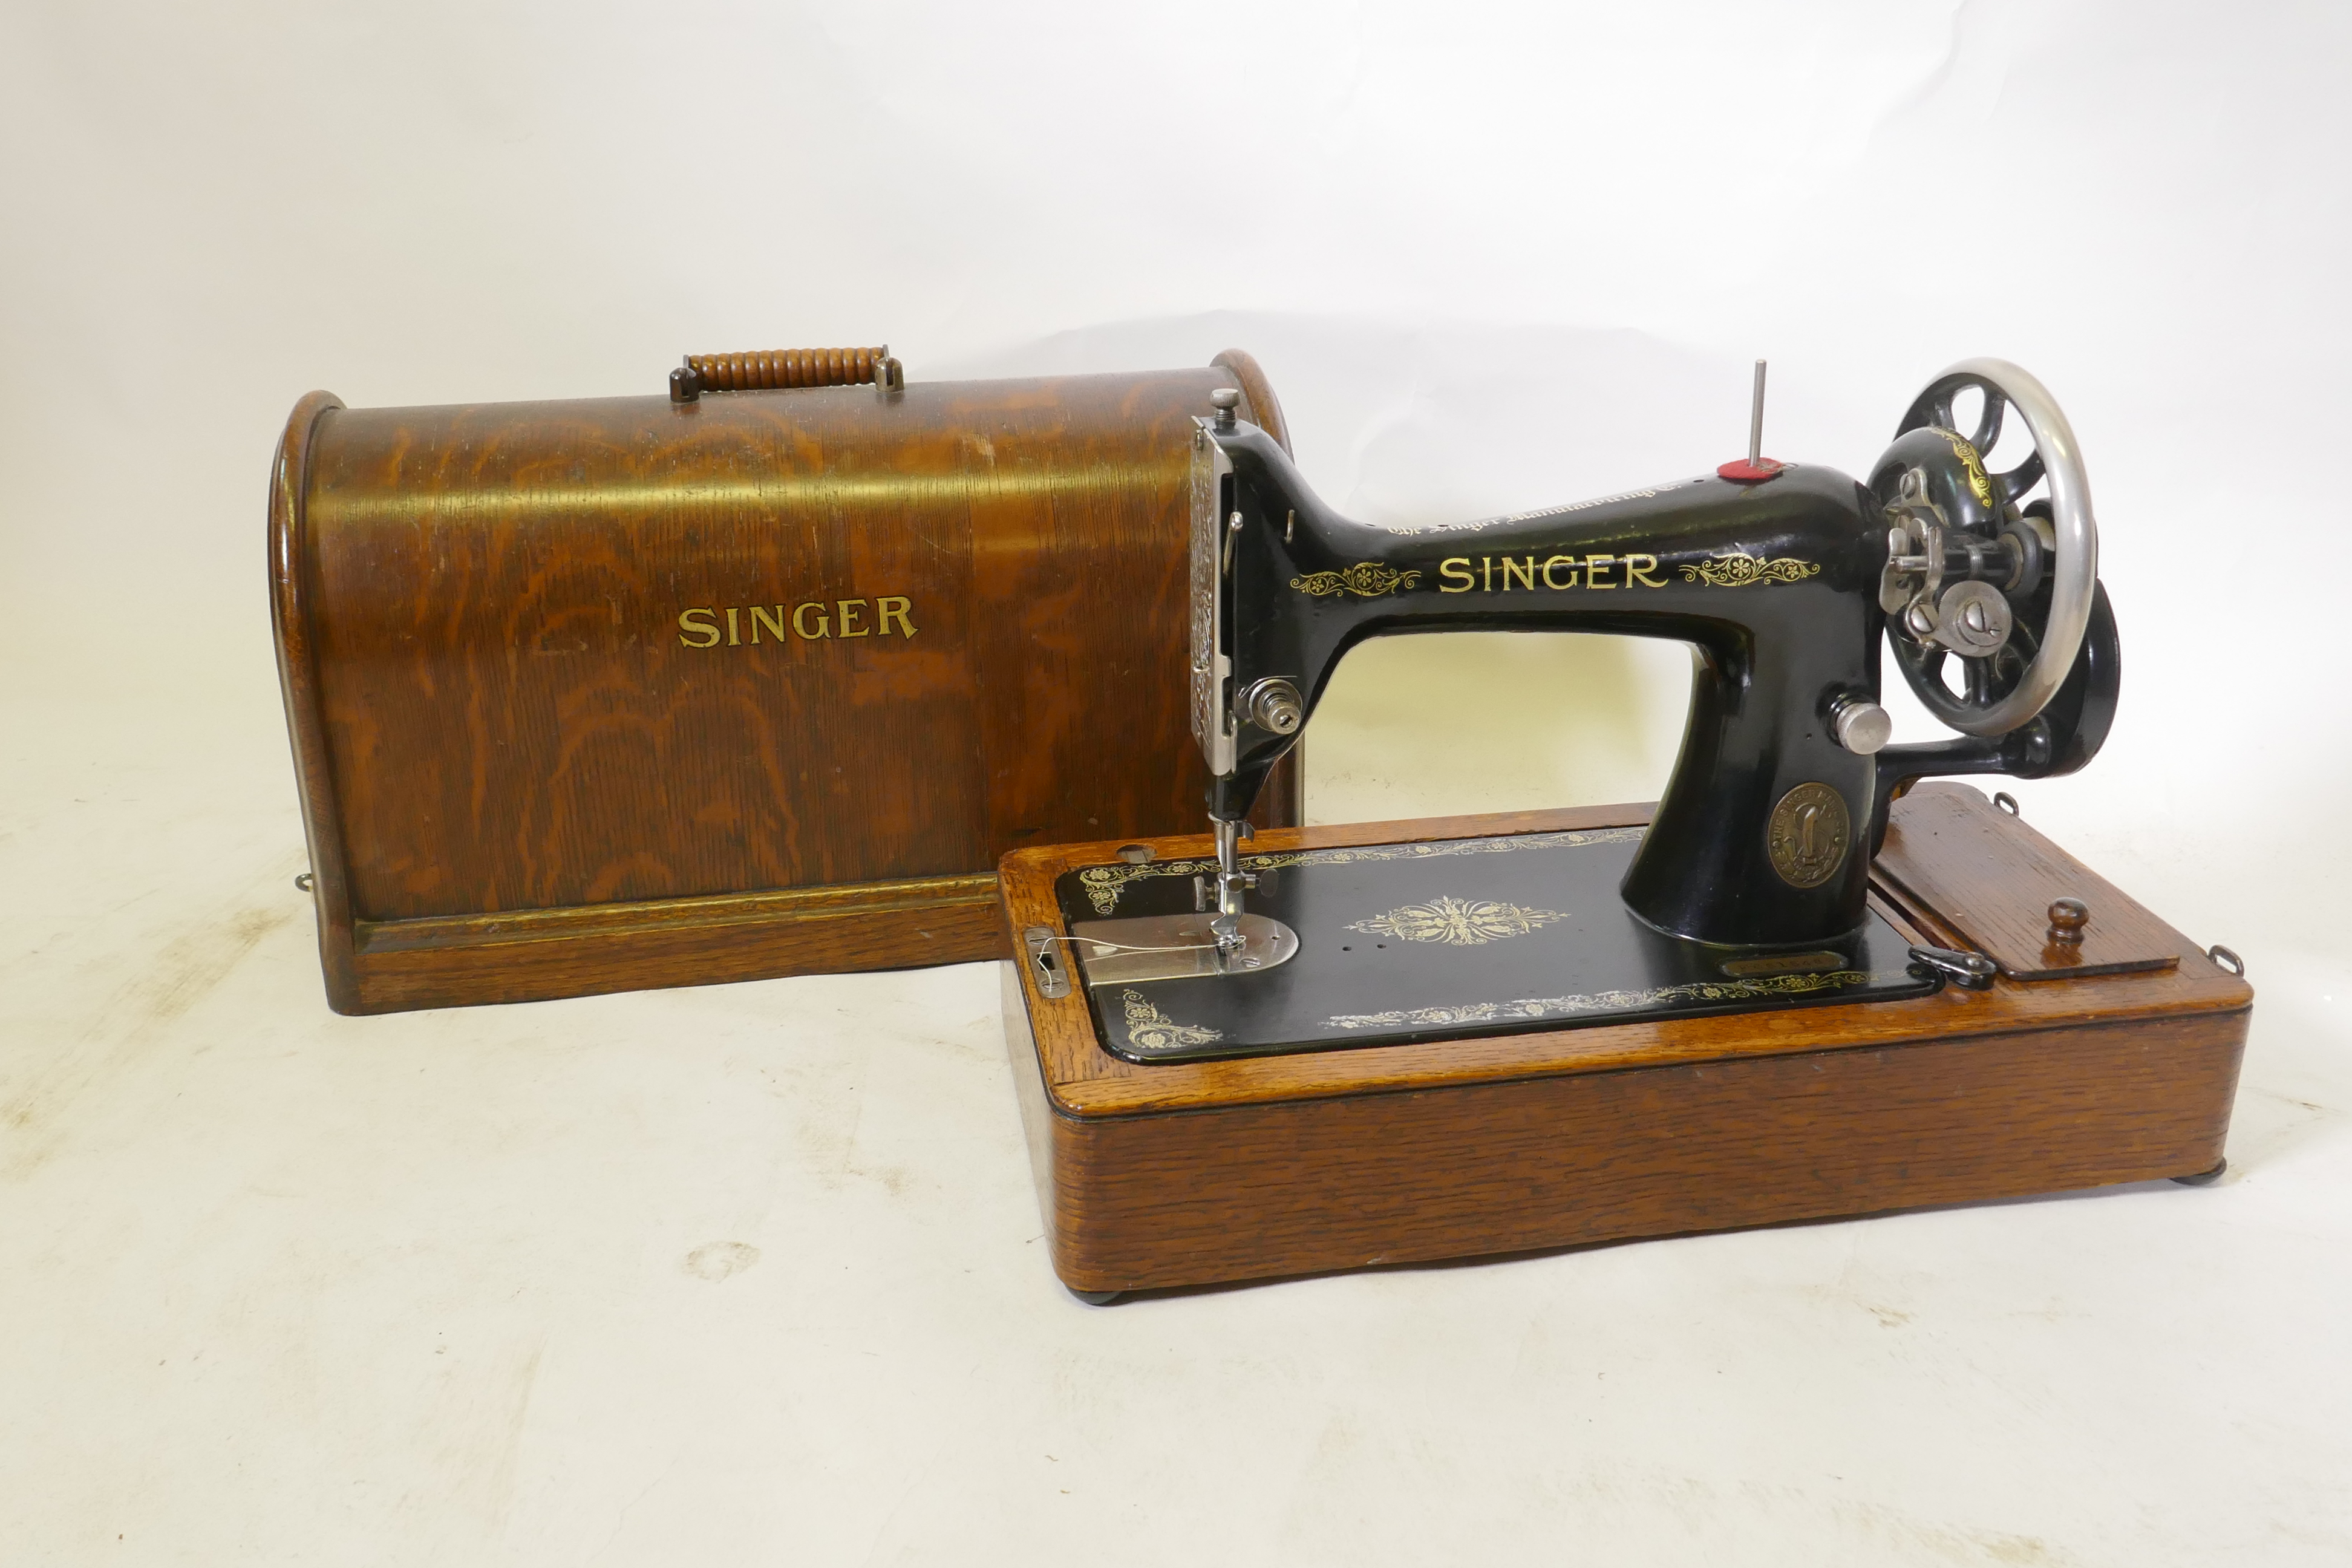 A Singer hand cranked sewing machine, No F6515489, in an oak case